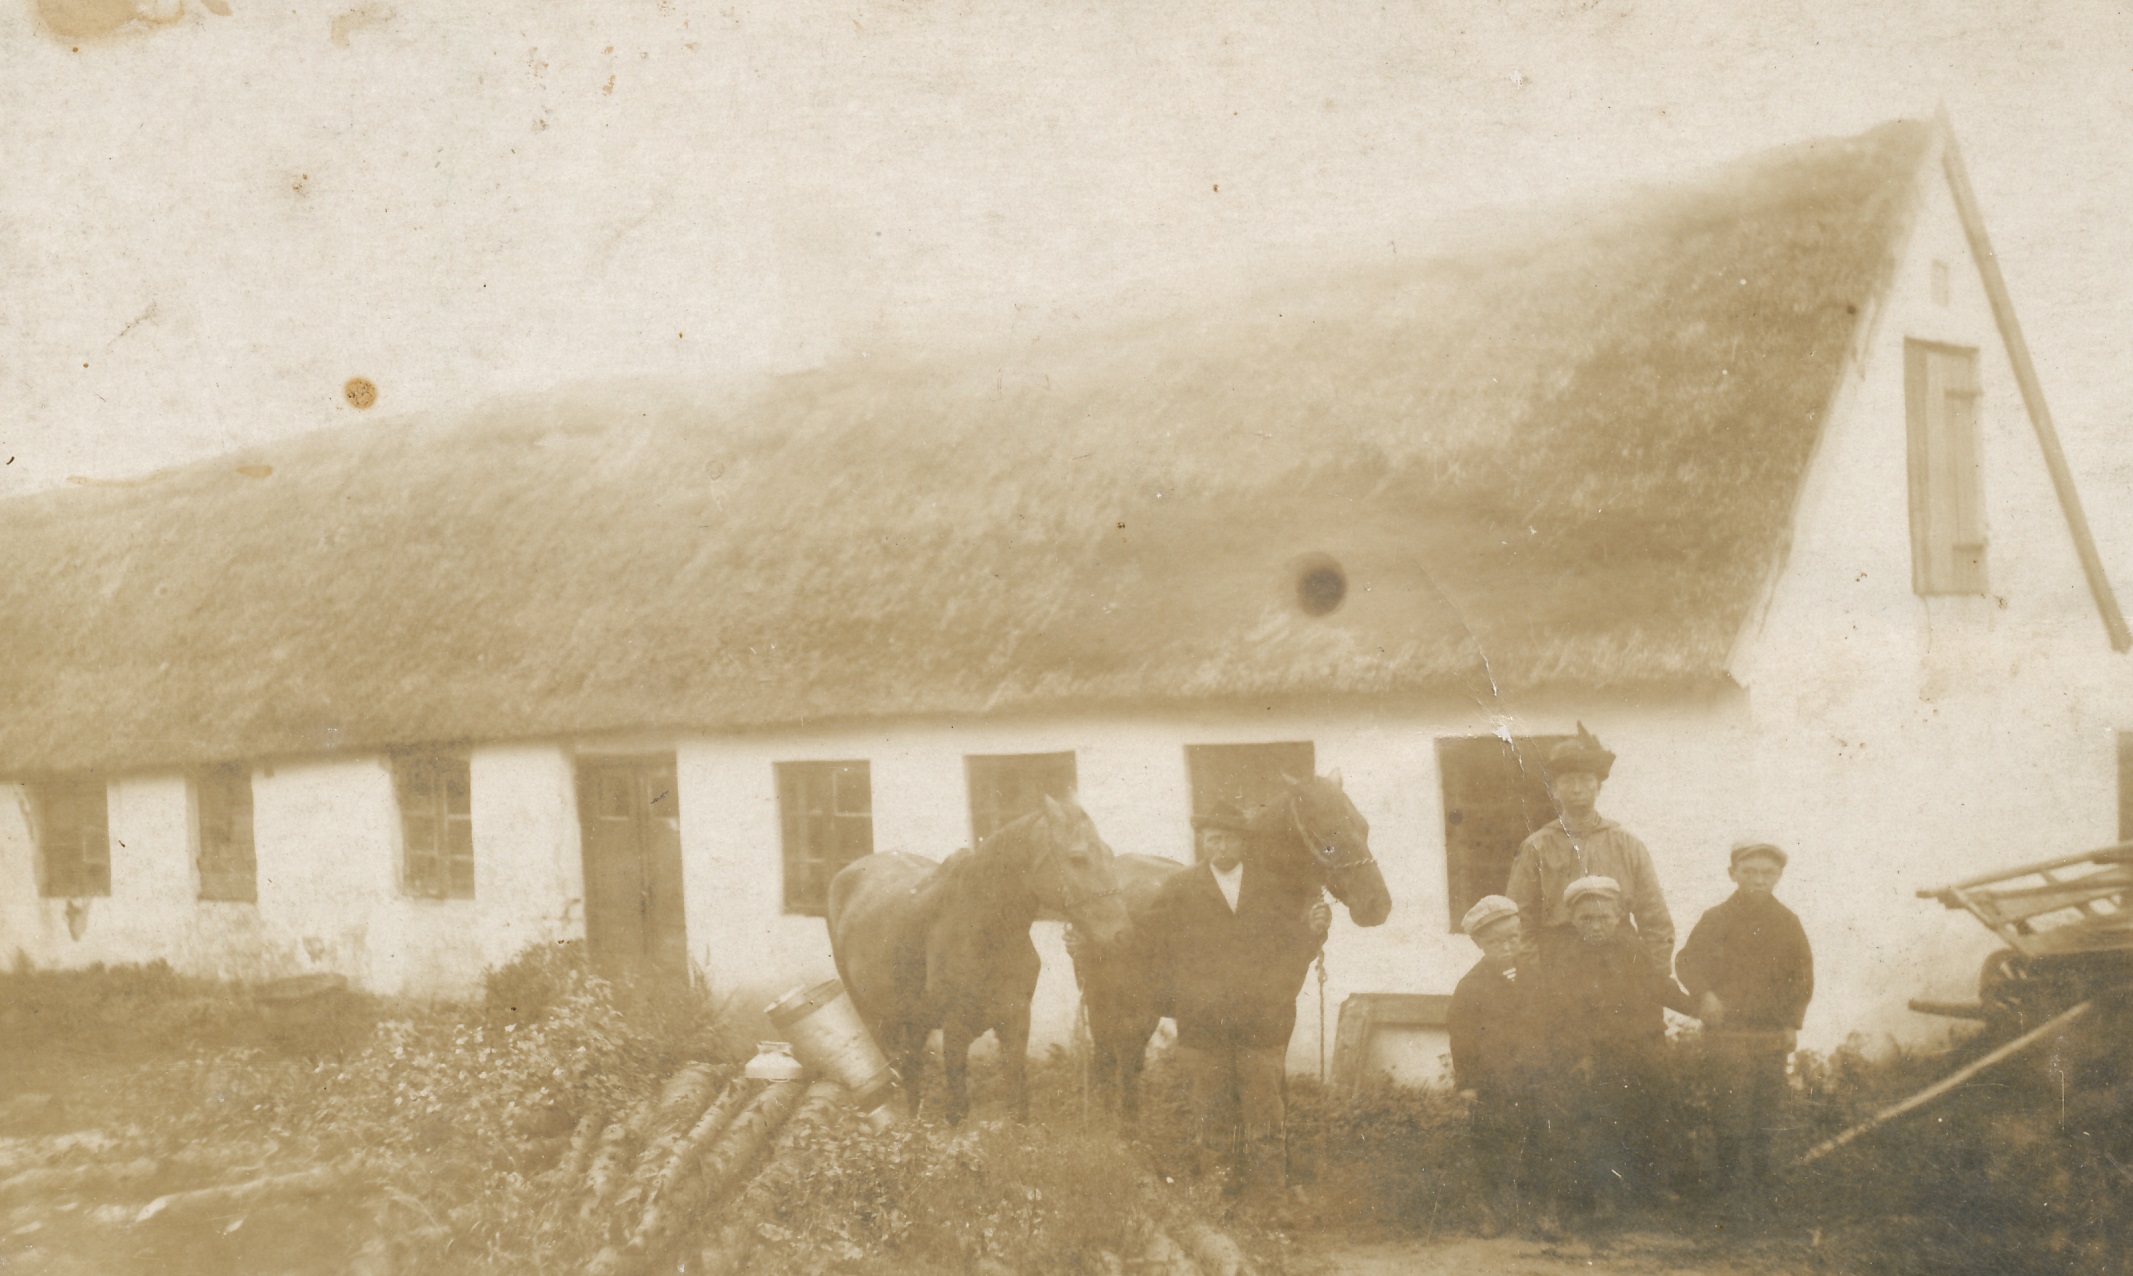 Landejendom ved Skamlebækvej/Tranelunden - ca. 1916 (B15112)